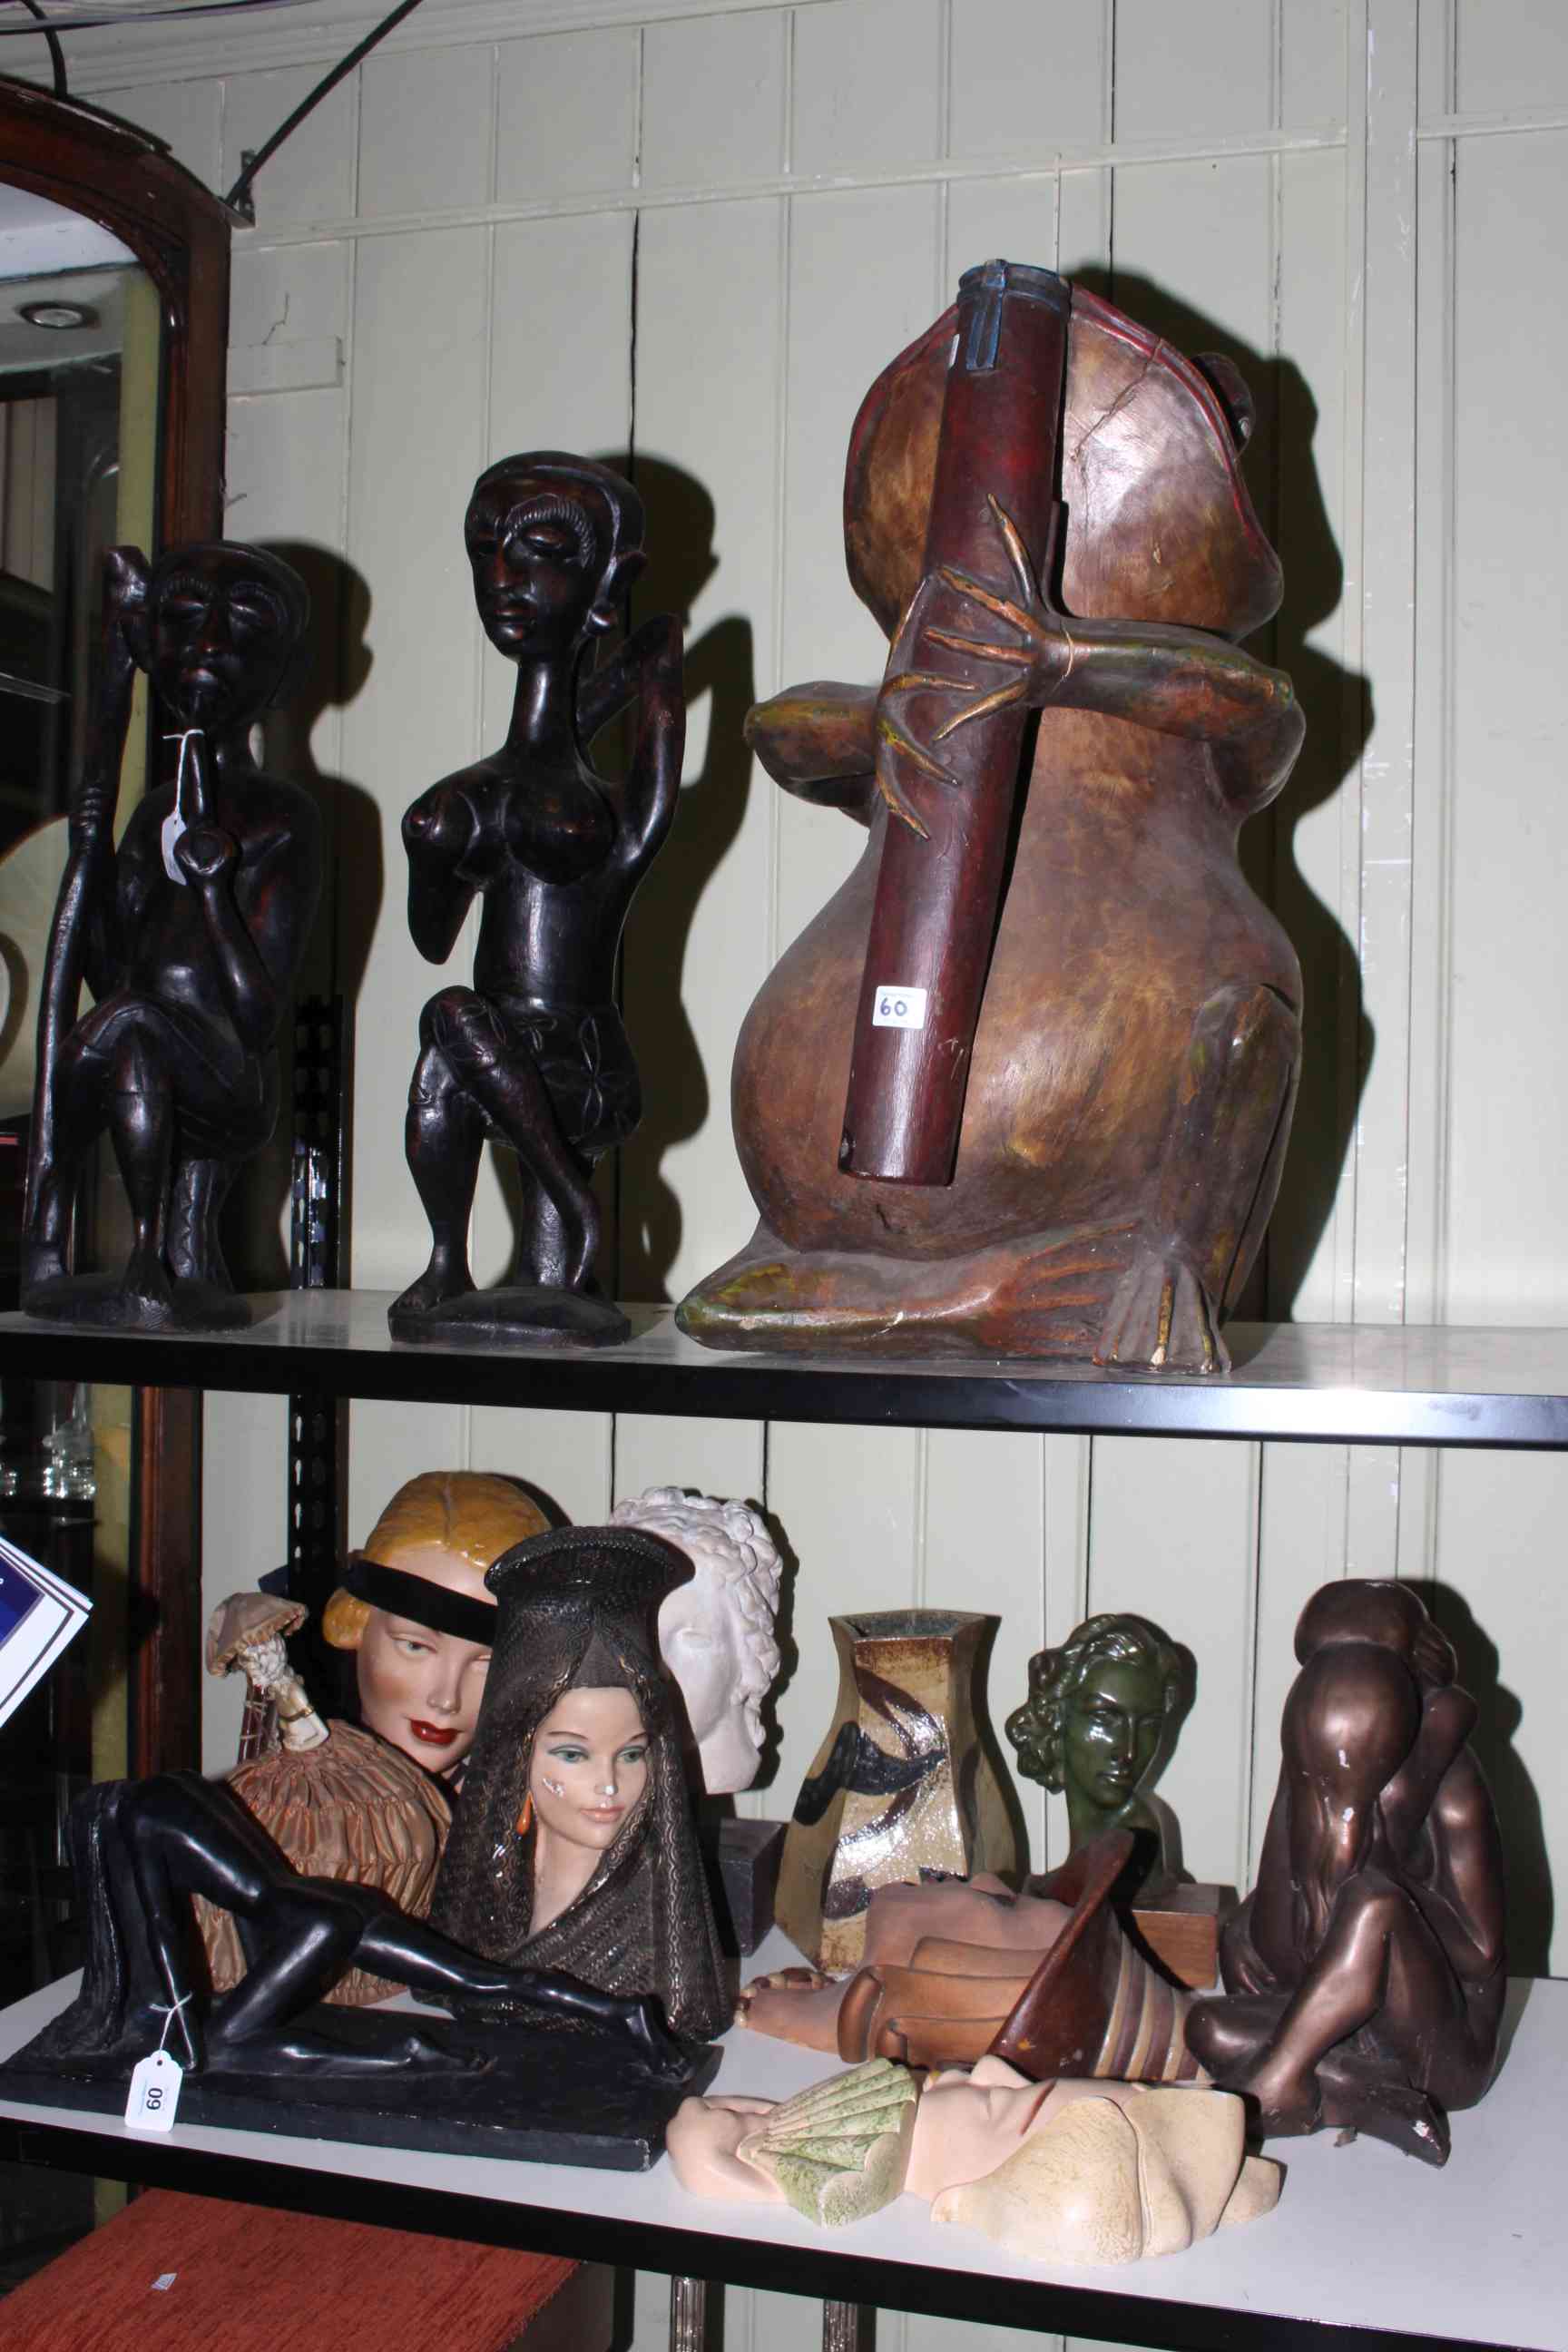 Pair of ethnic carved figures, large model of frog, bust, face masks, bronzed female nude, etc.